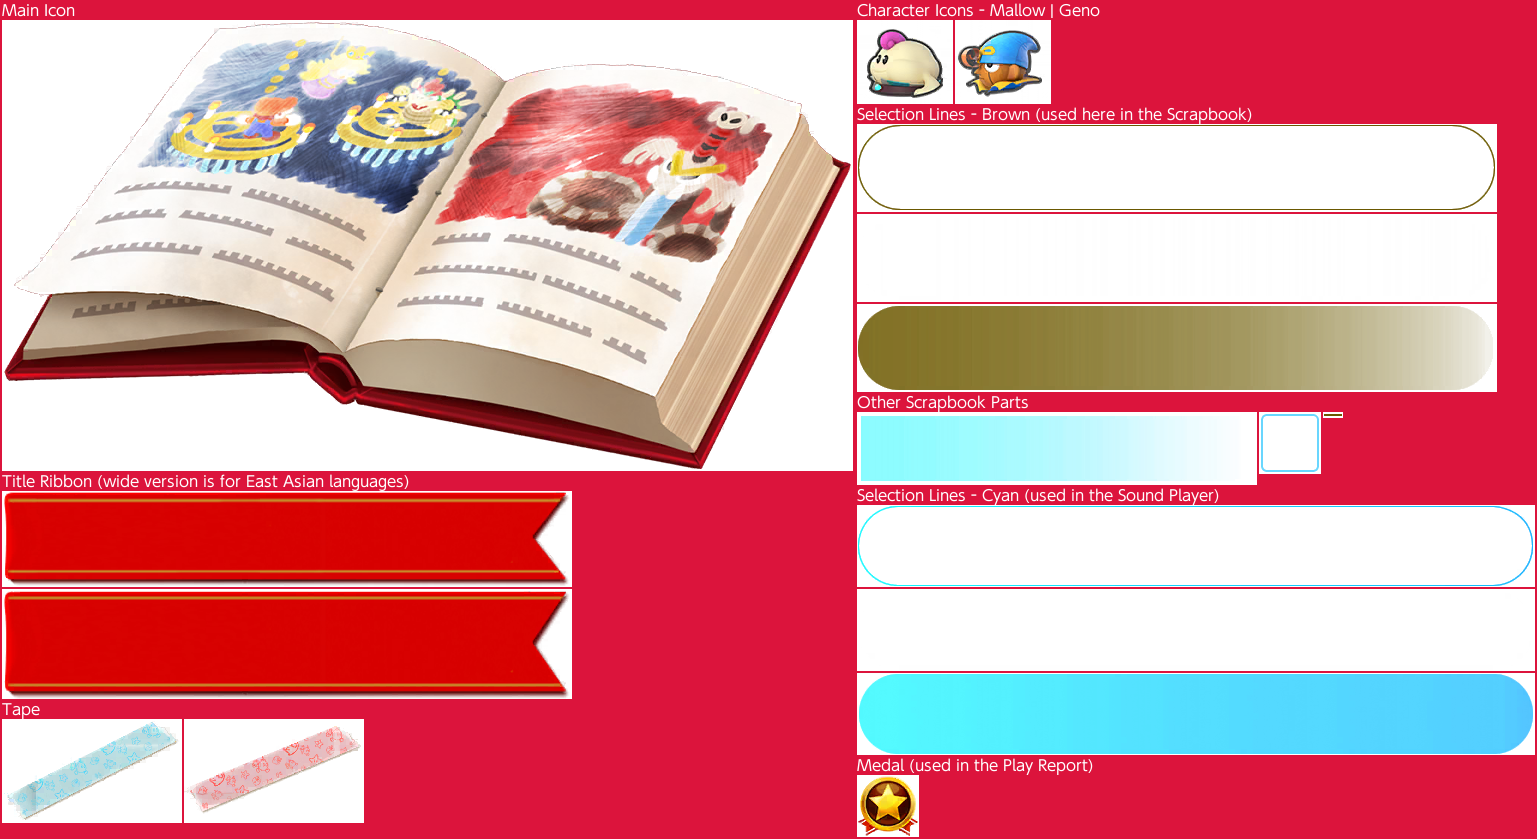 Super Mario RPG - Journal - Scrapbook and Other Activities Parts